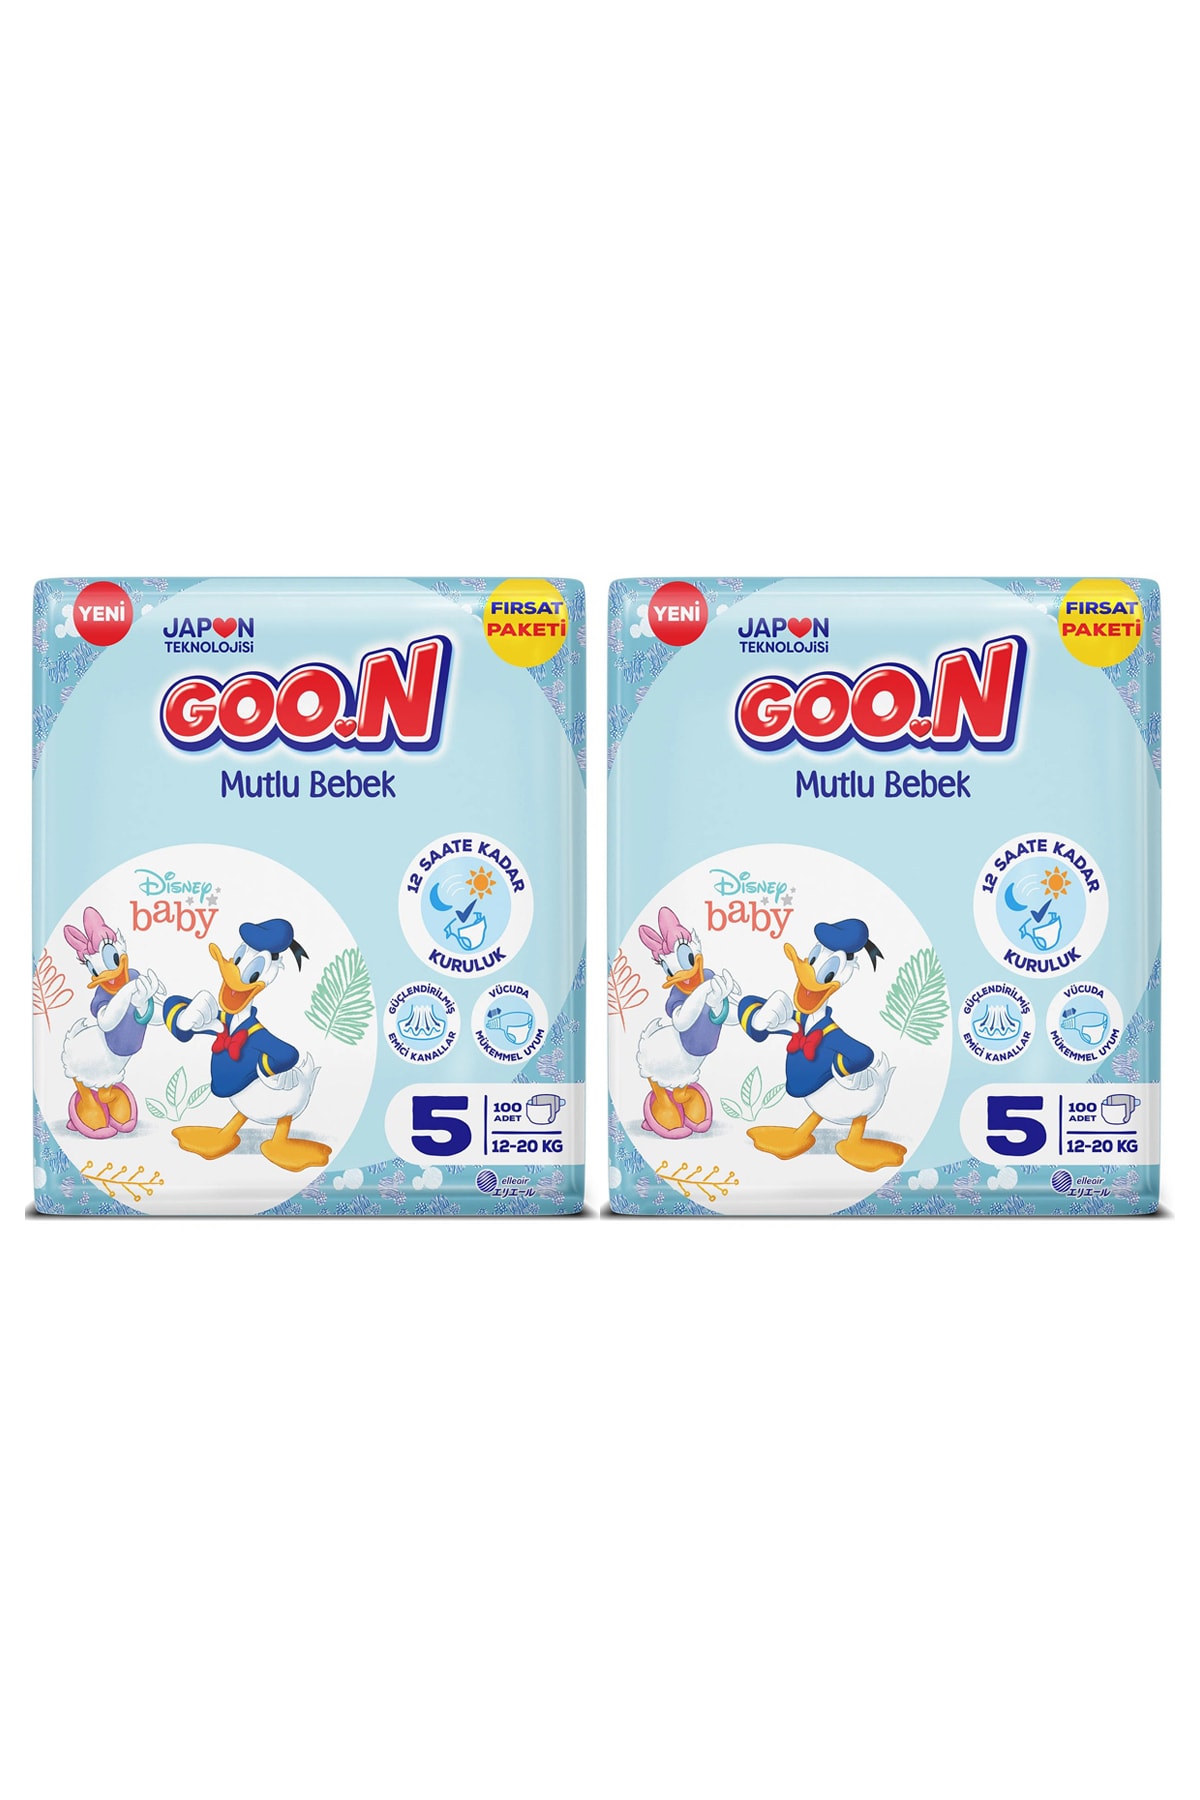 Goon Premium Mutlu Bebek Fırsat Paketi 5 Numara 12 20 kg 100' lü 2 Paket 200 Adet